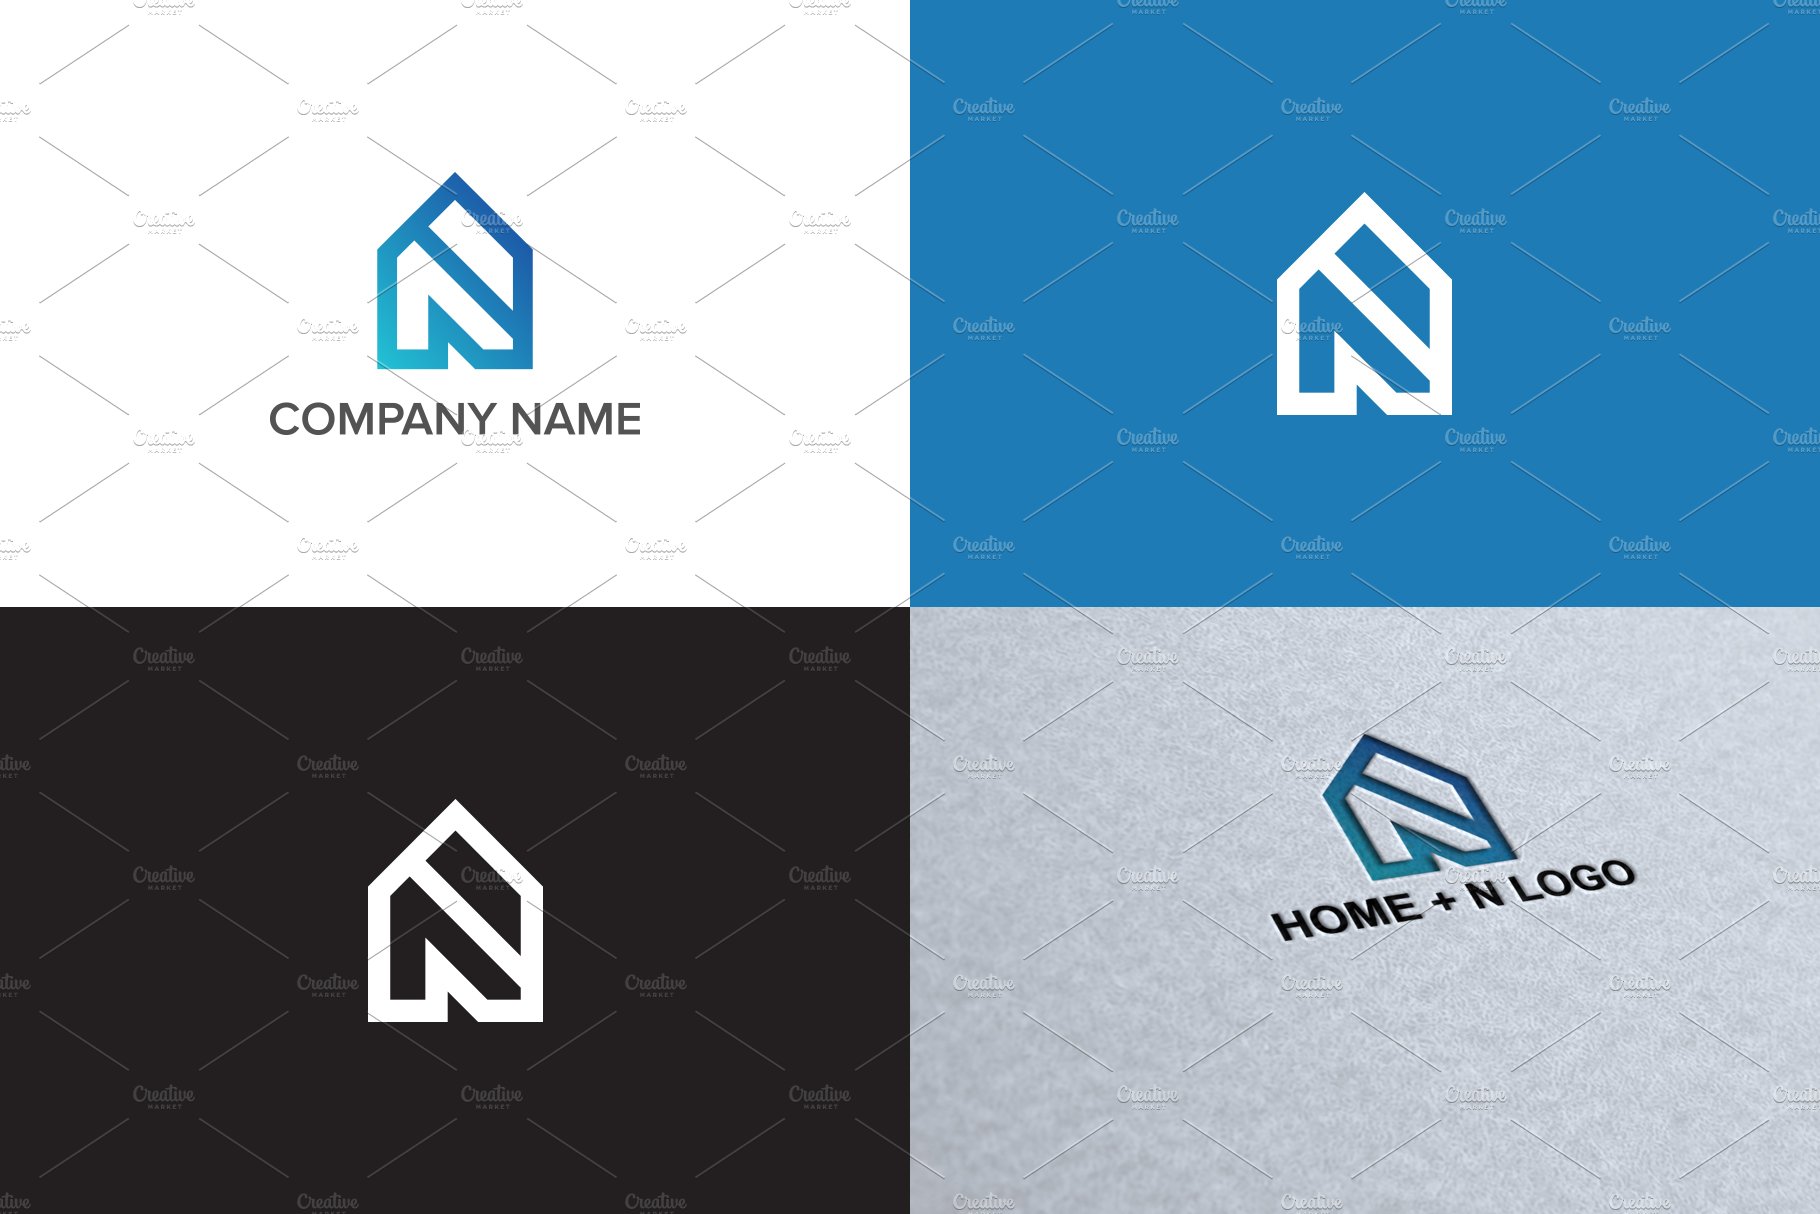 Home logo design preview image.